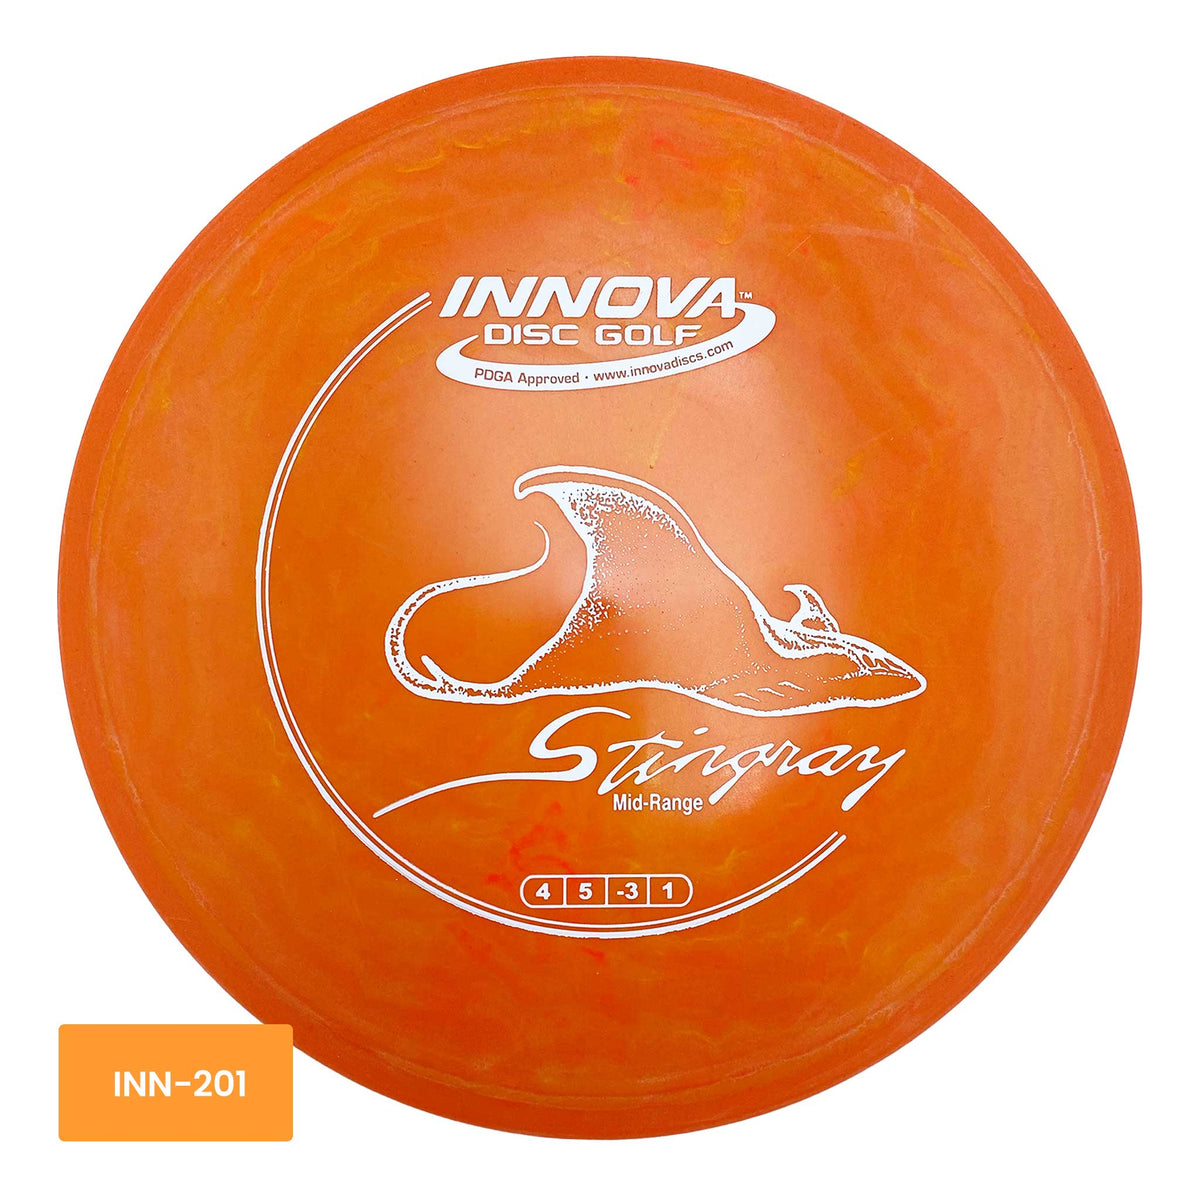 Innova Disc Golf DX Stingray midrange - Orange / White